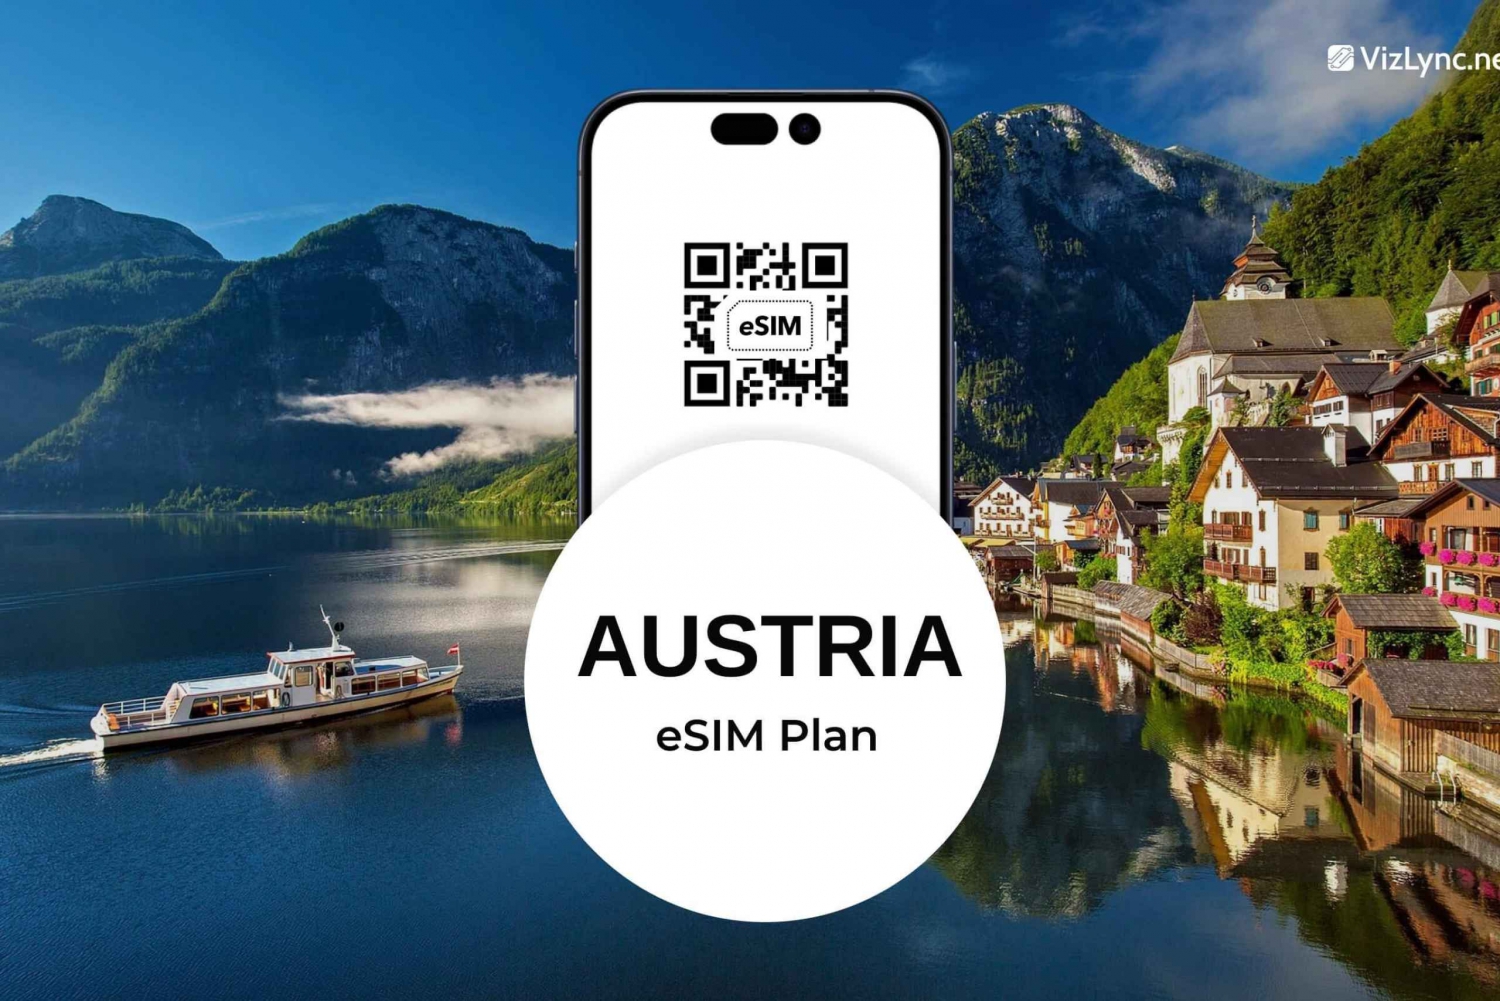 Østerrike Reise eSIM-abonnement med superrask mobildata